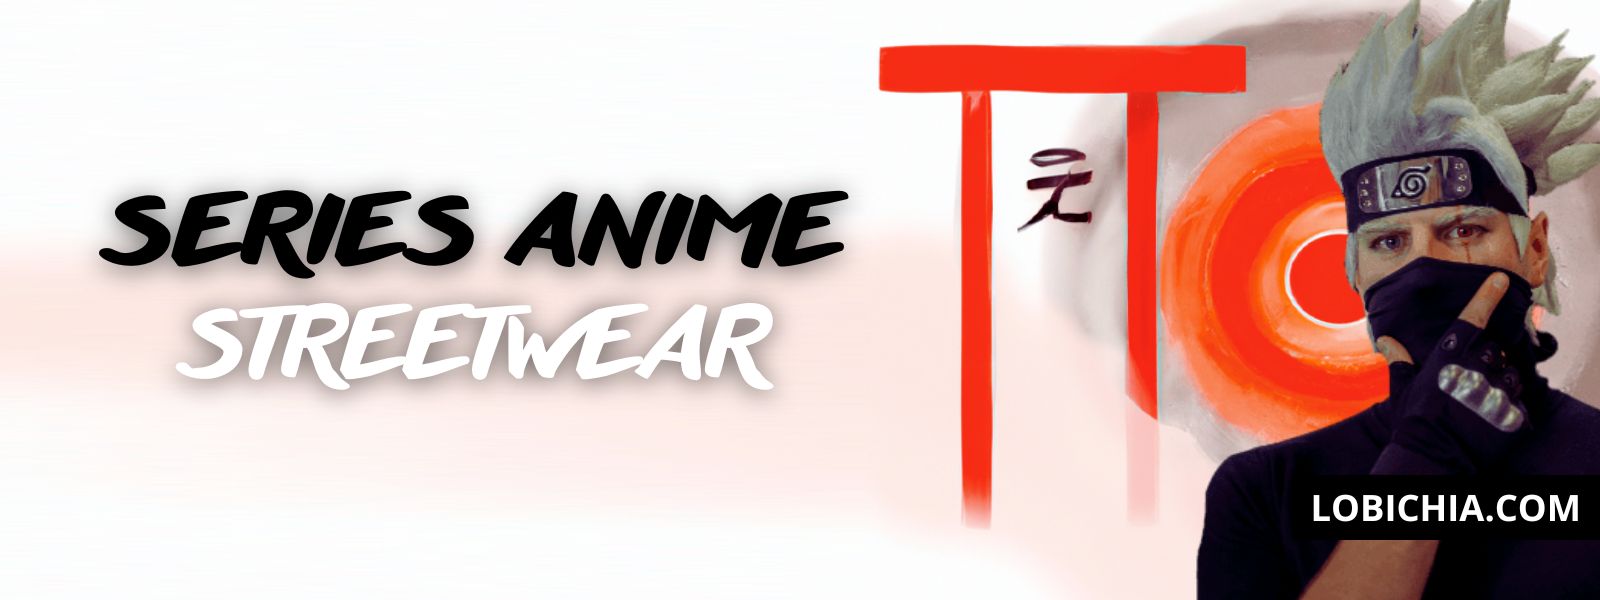 Series-Anime-Streetwear